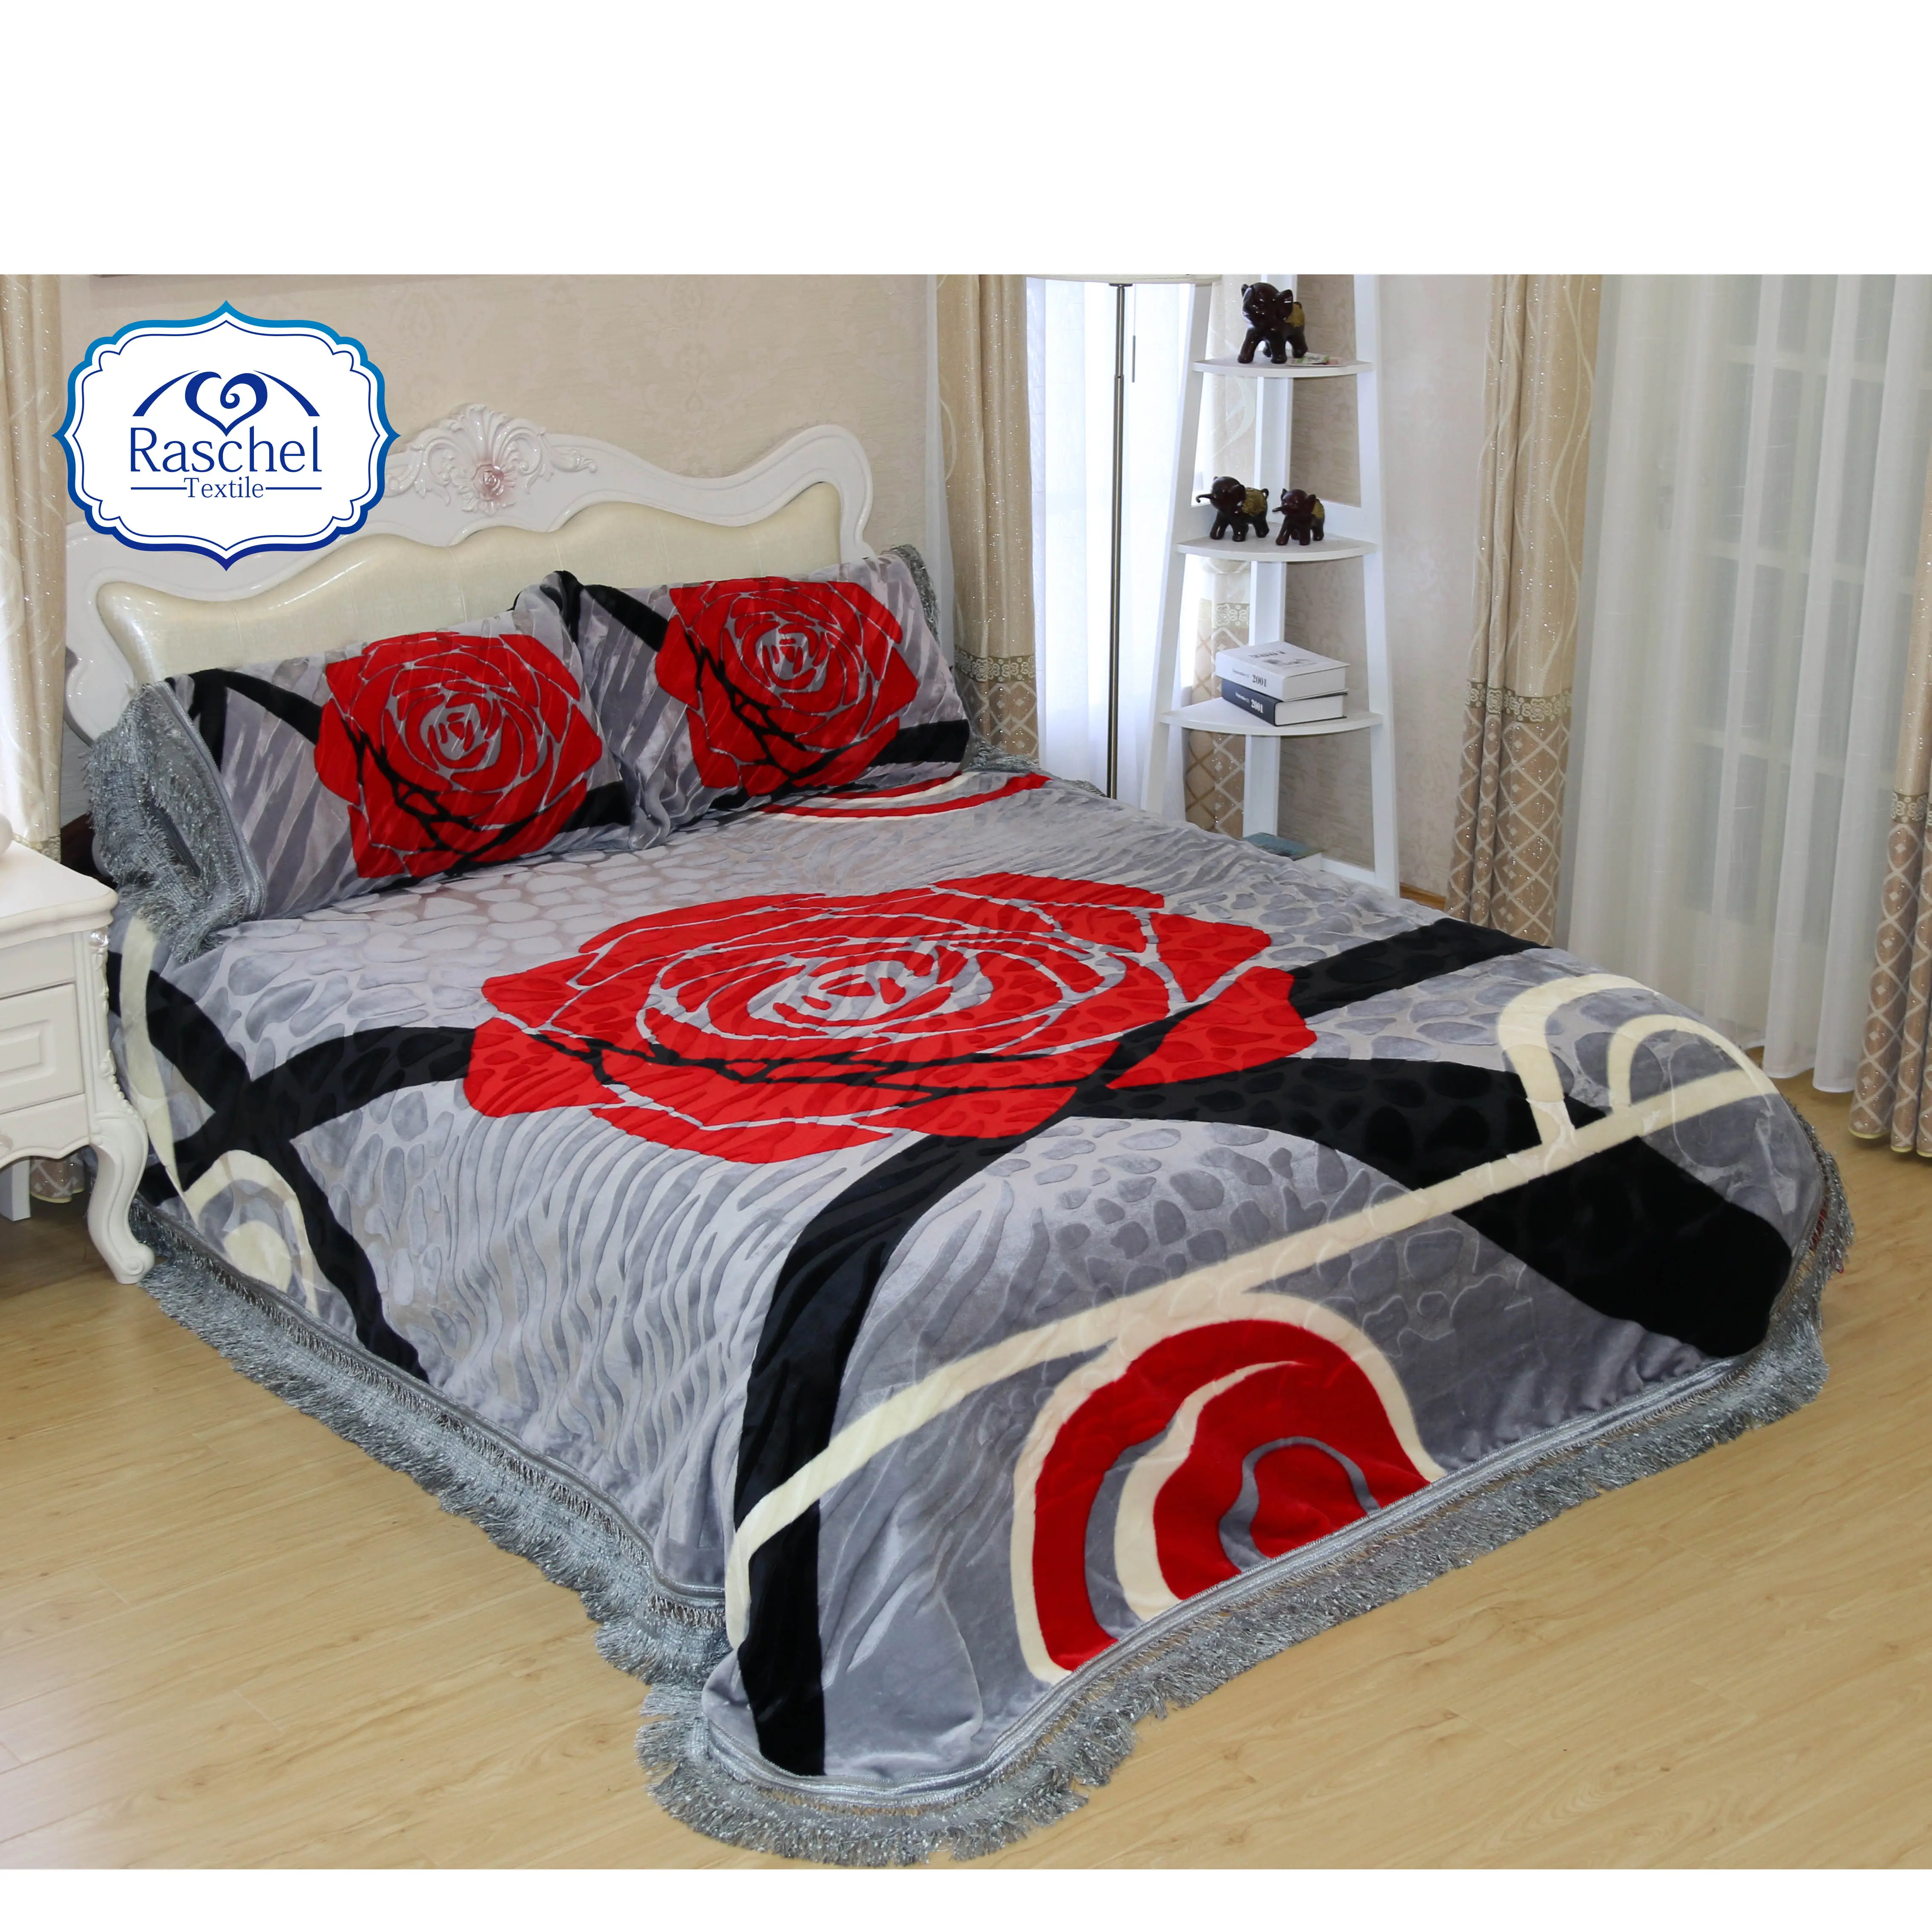 Super Soft 100% Polyester Korean Raschel Quality 3 PCS Blanket Bedroom Set